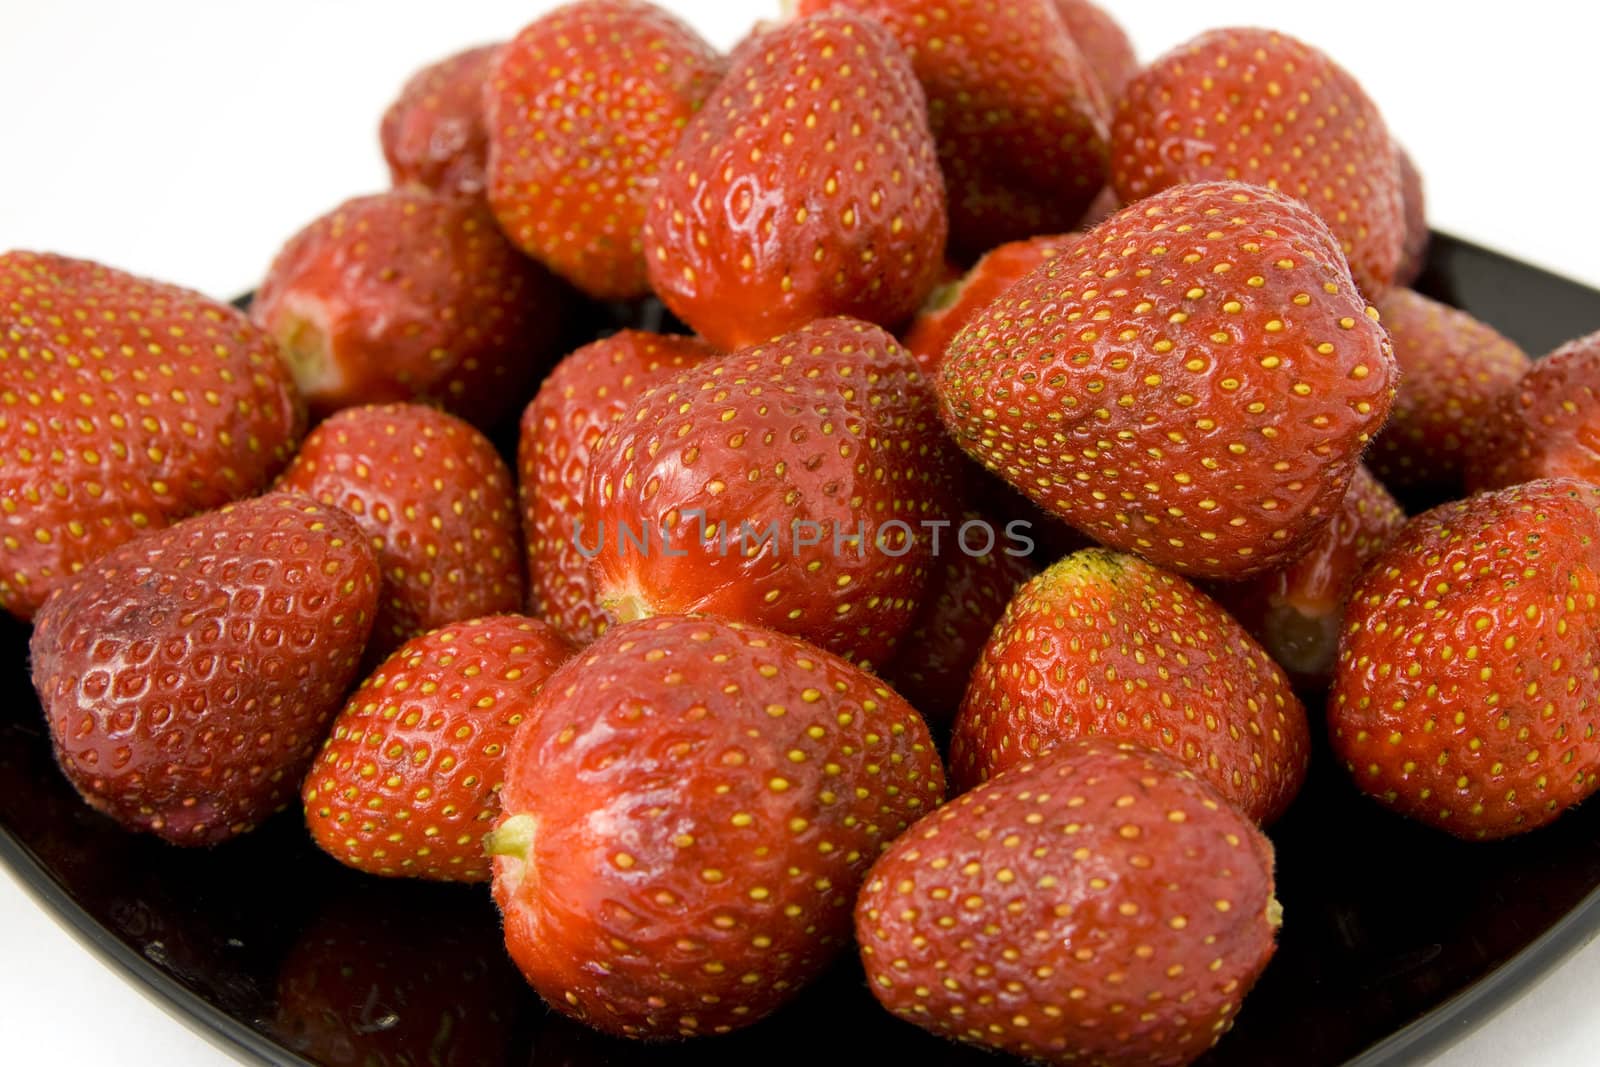 strawberries on plate